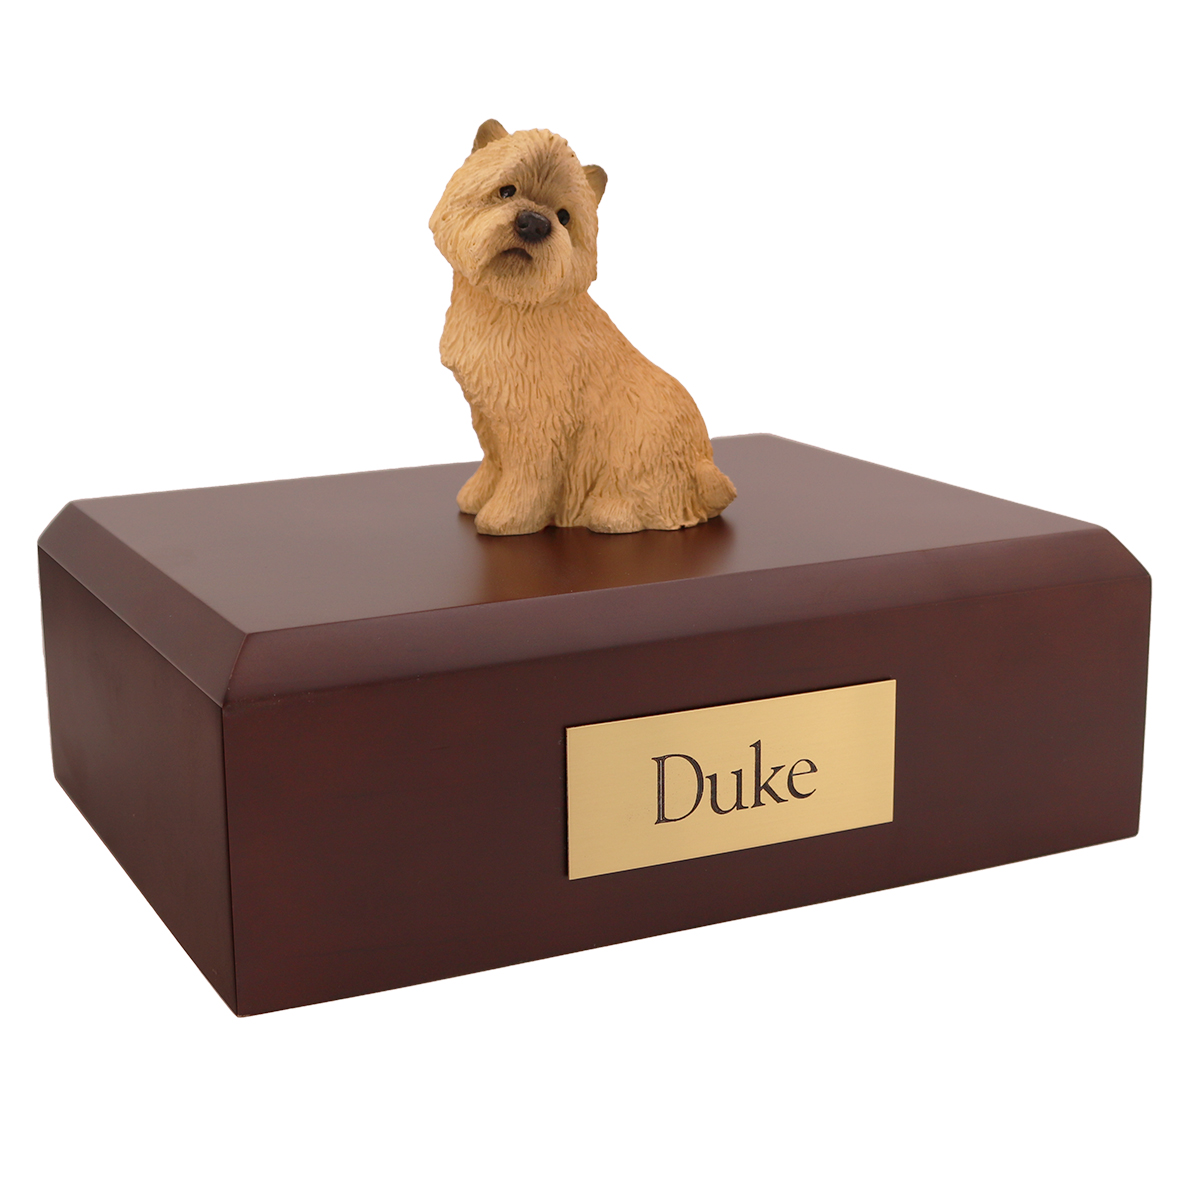 Dog, Cairn Terrier, Tan - Figurine Urn